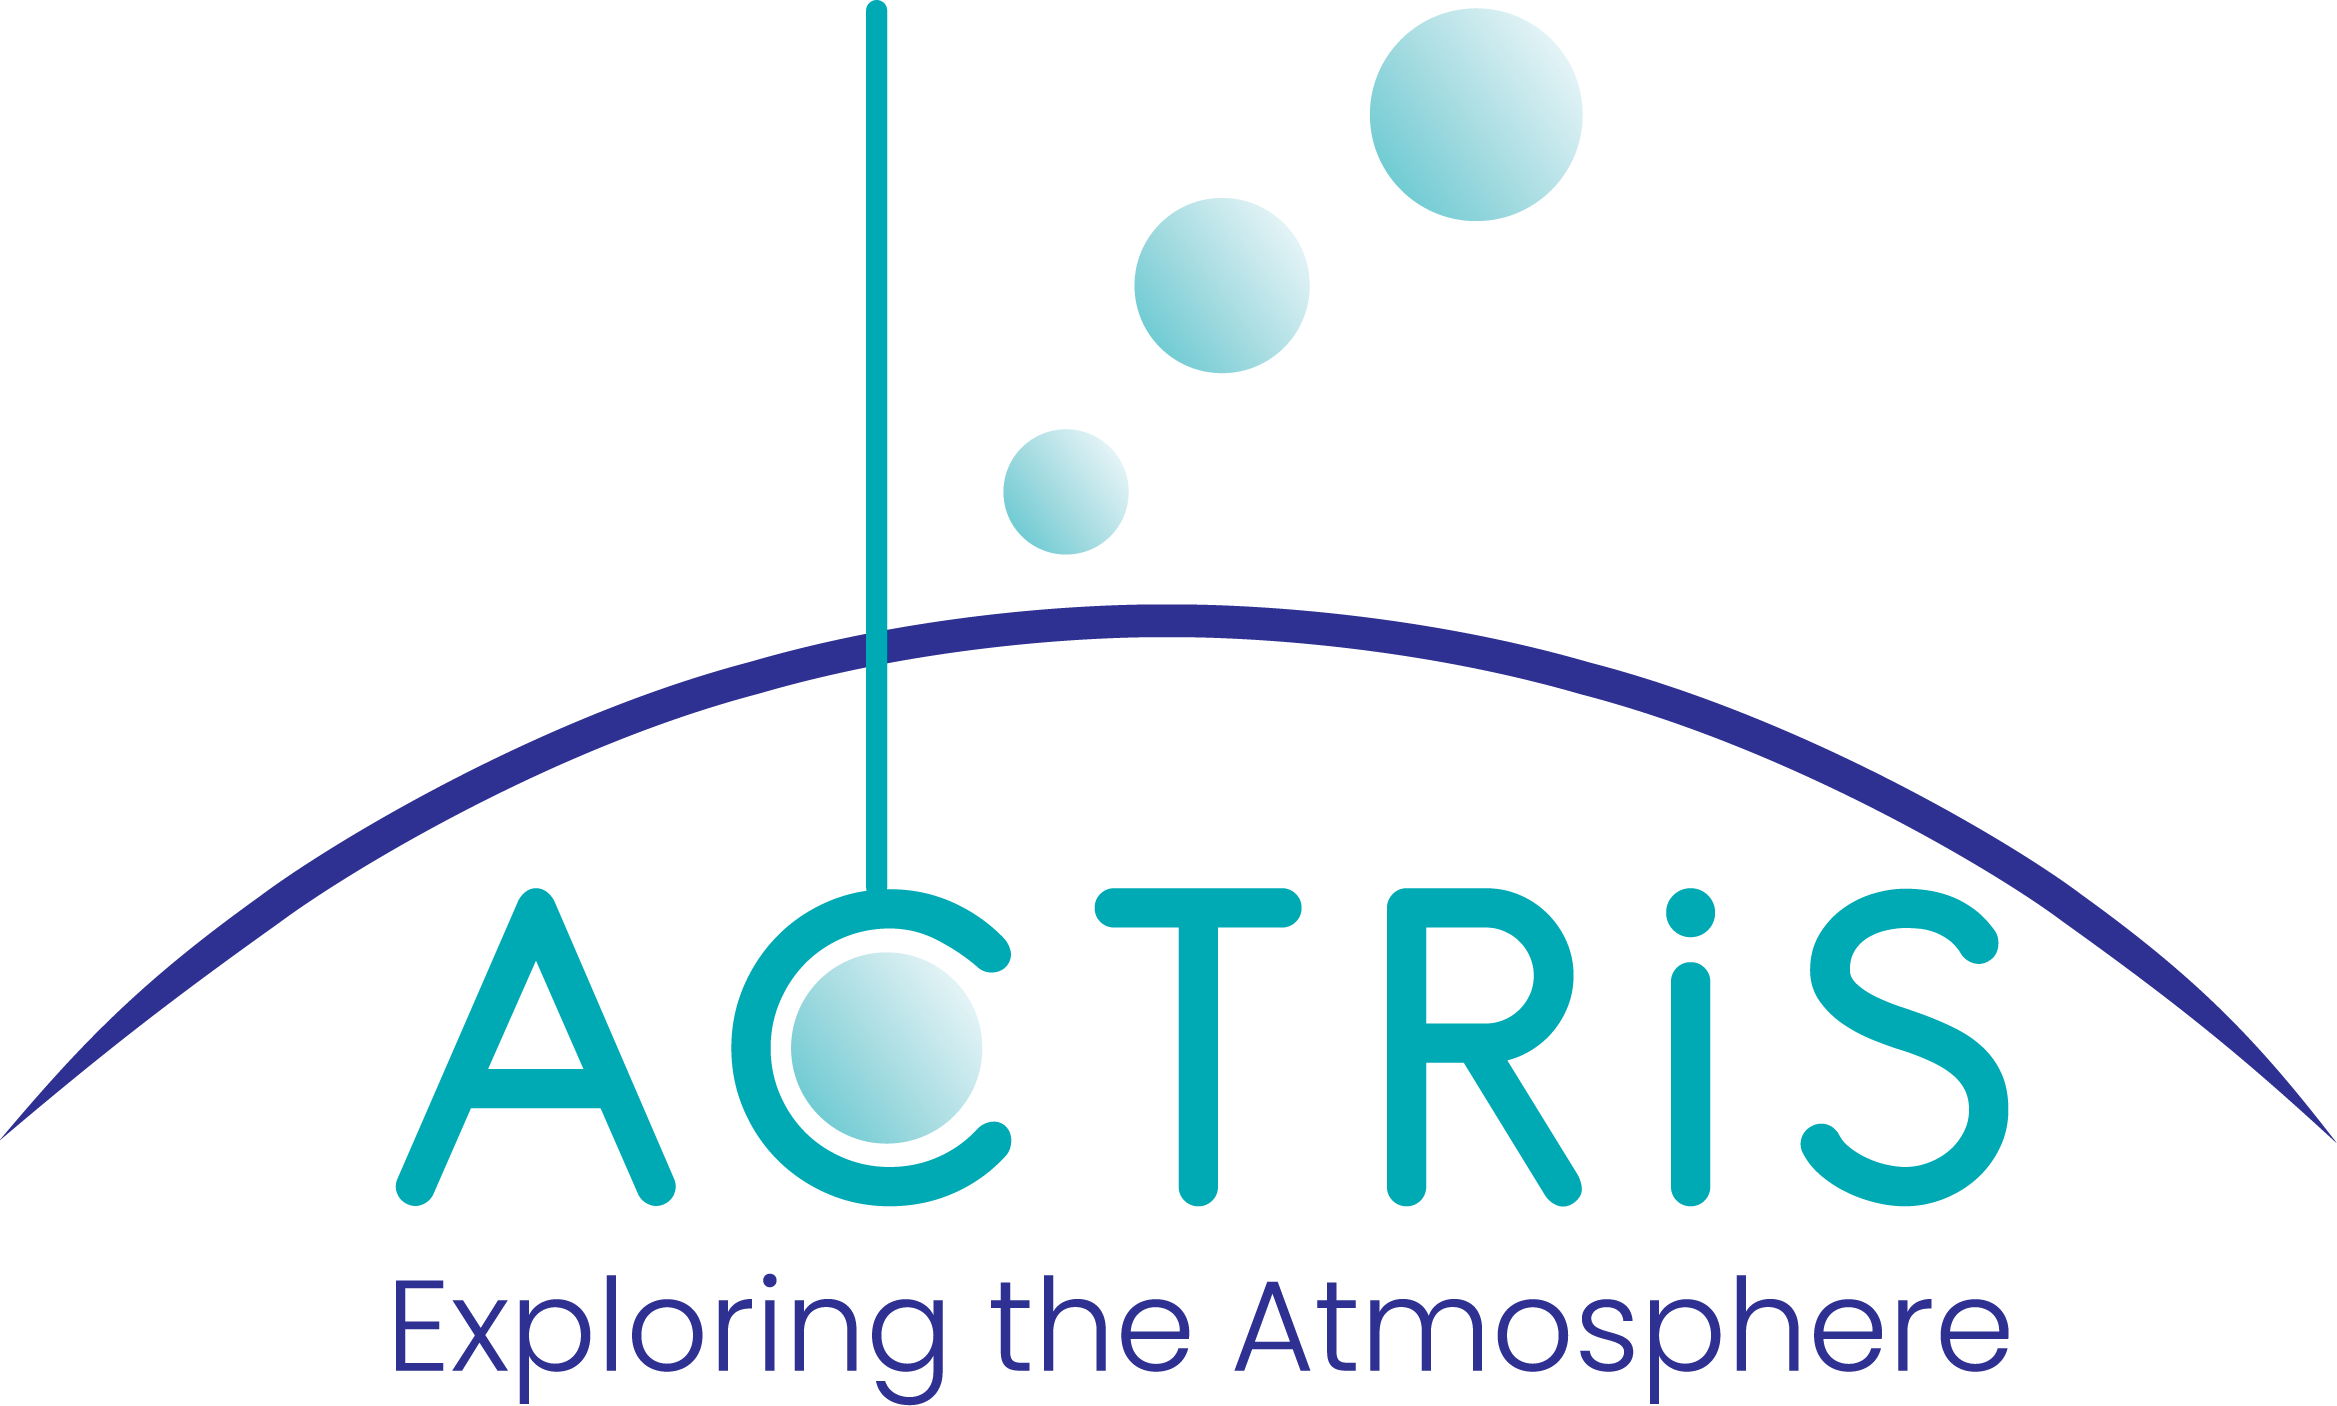 Actris logo_0.png